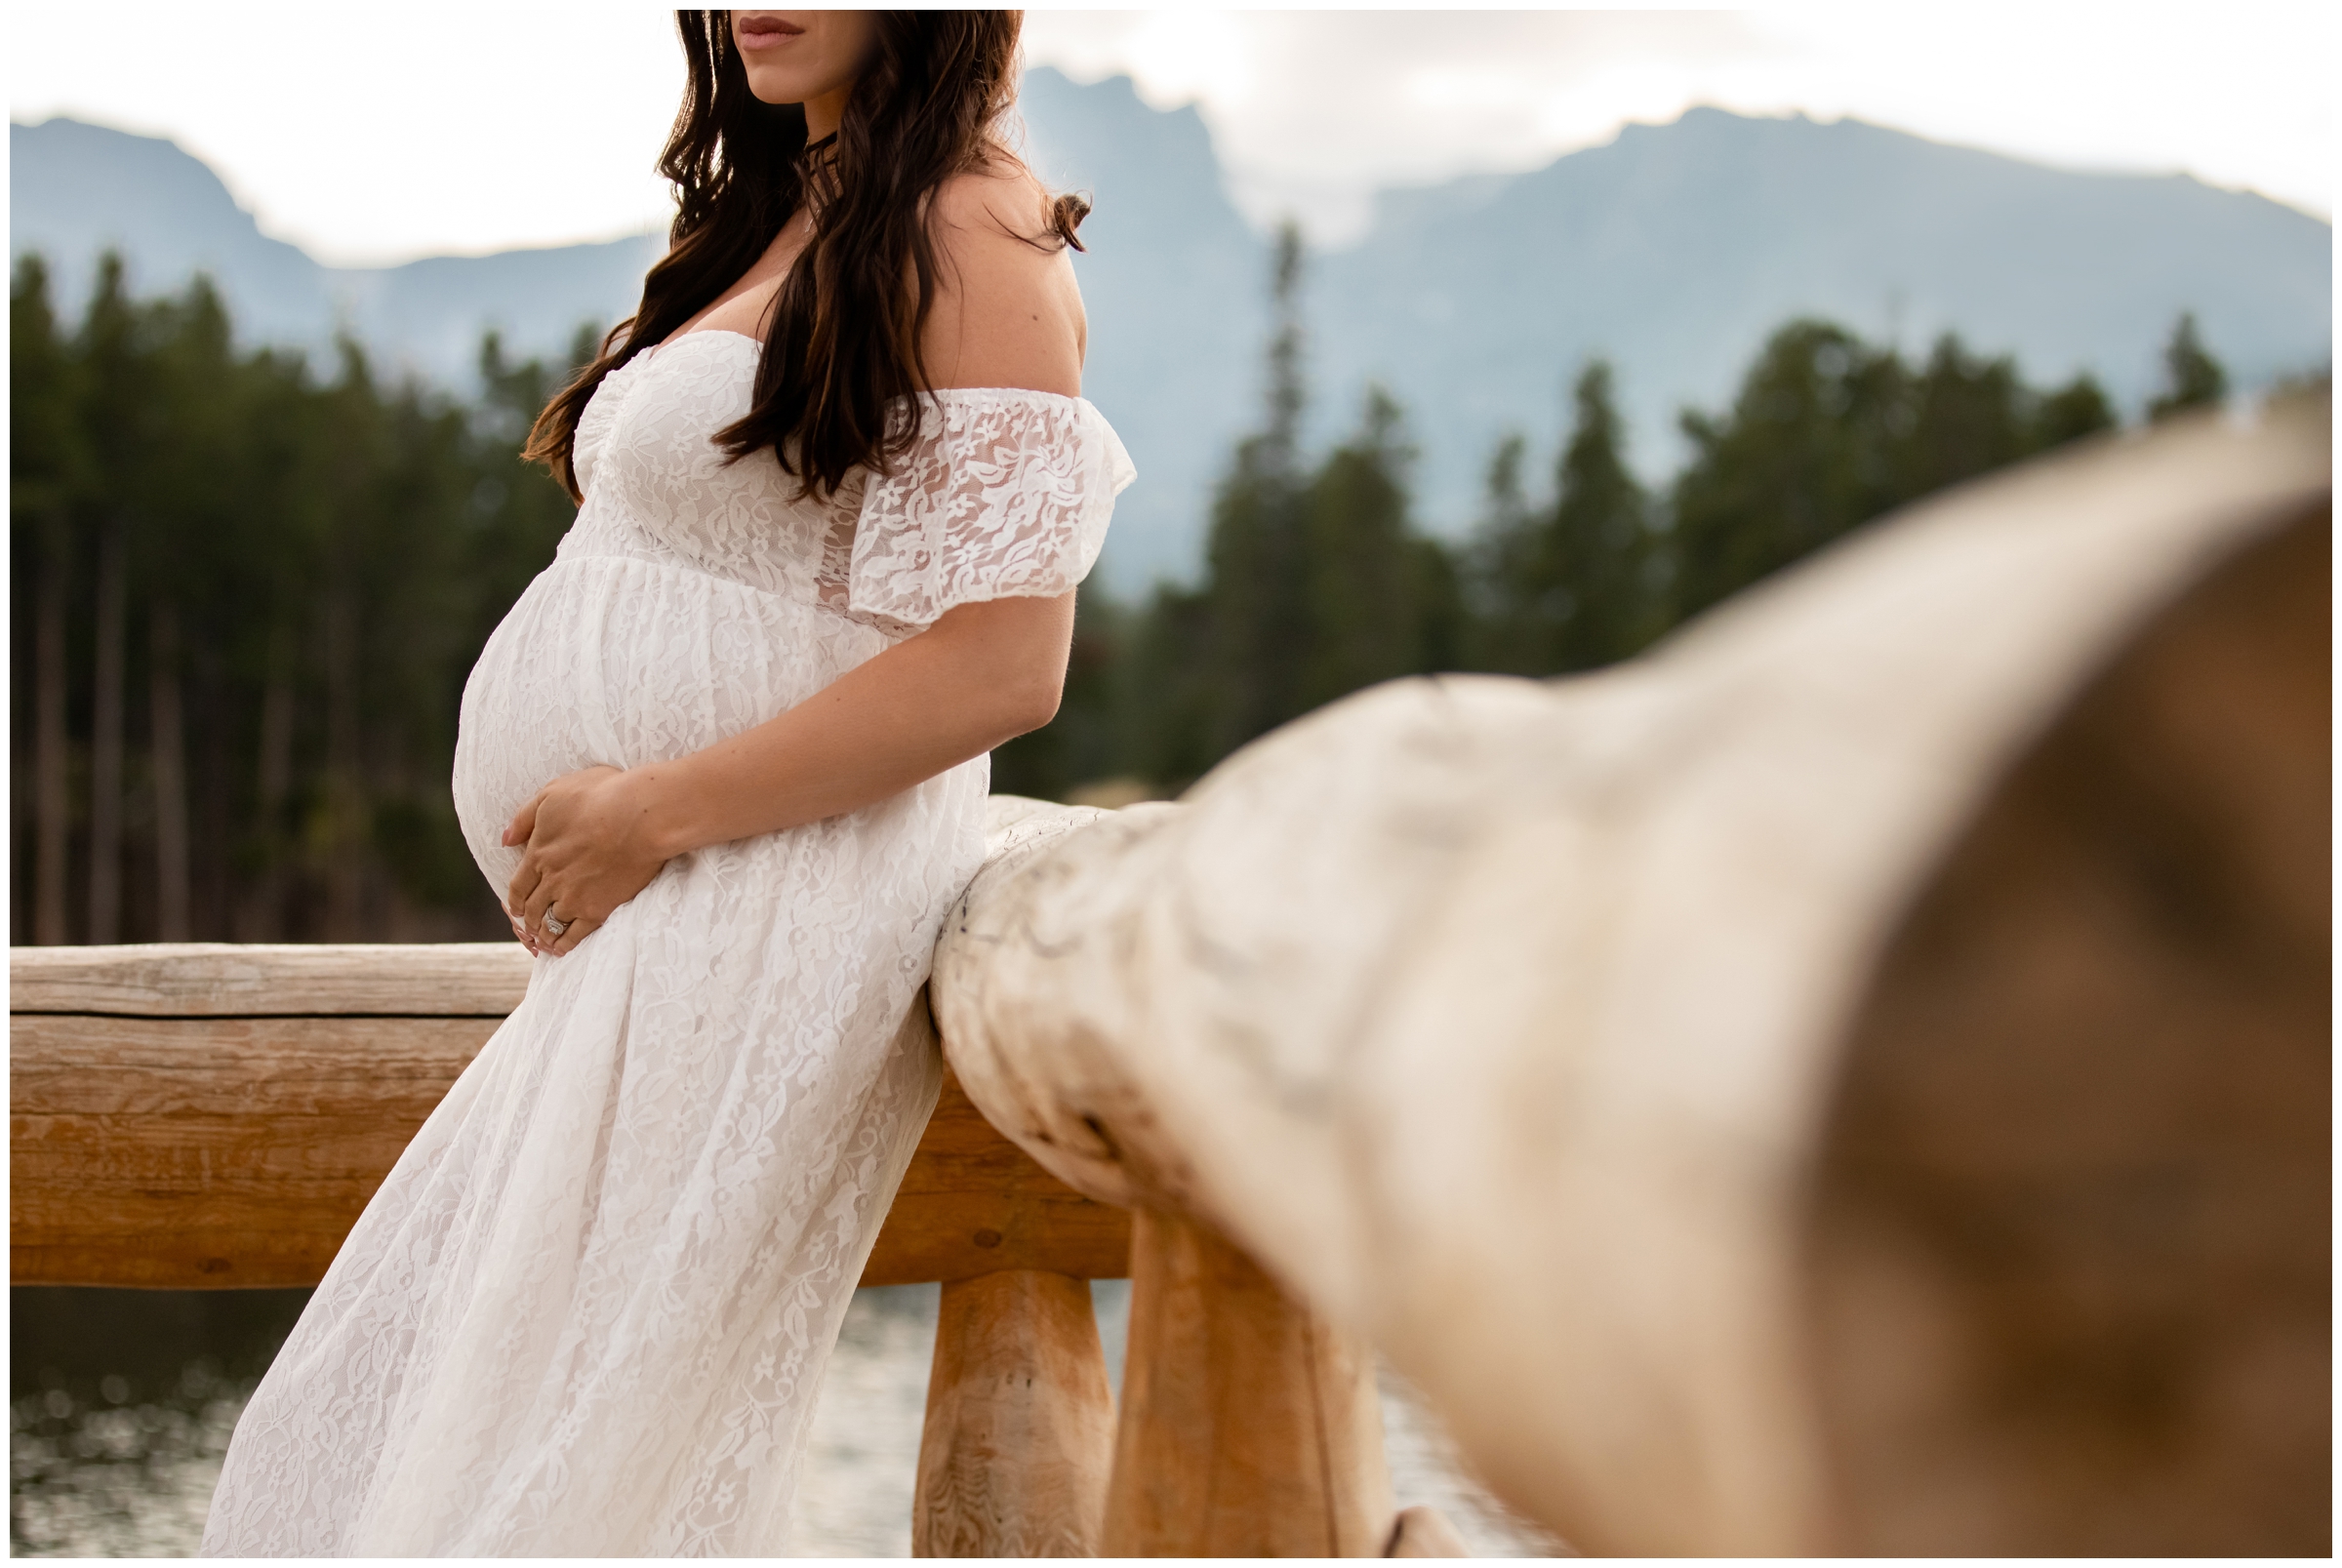 Colorado pregnancy photo shoot at Sprague Lake in Rocky Mountain National Park